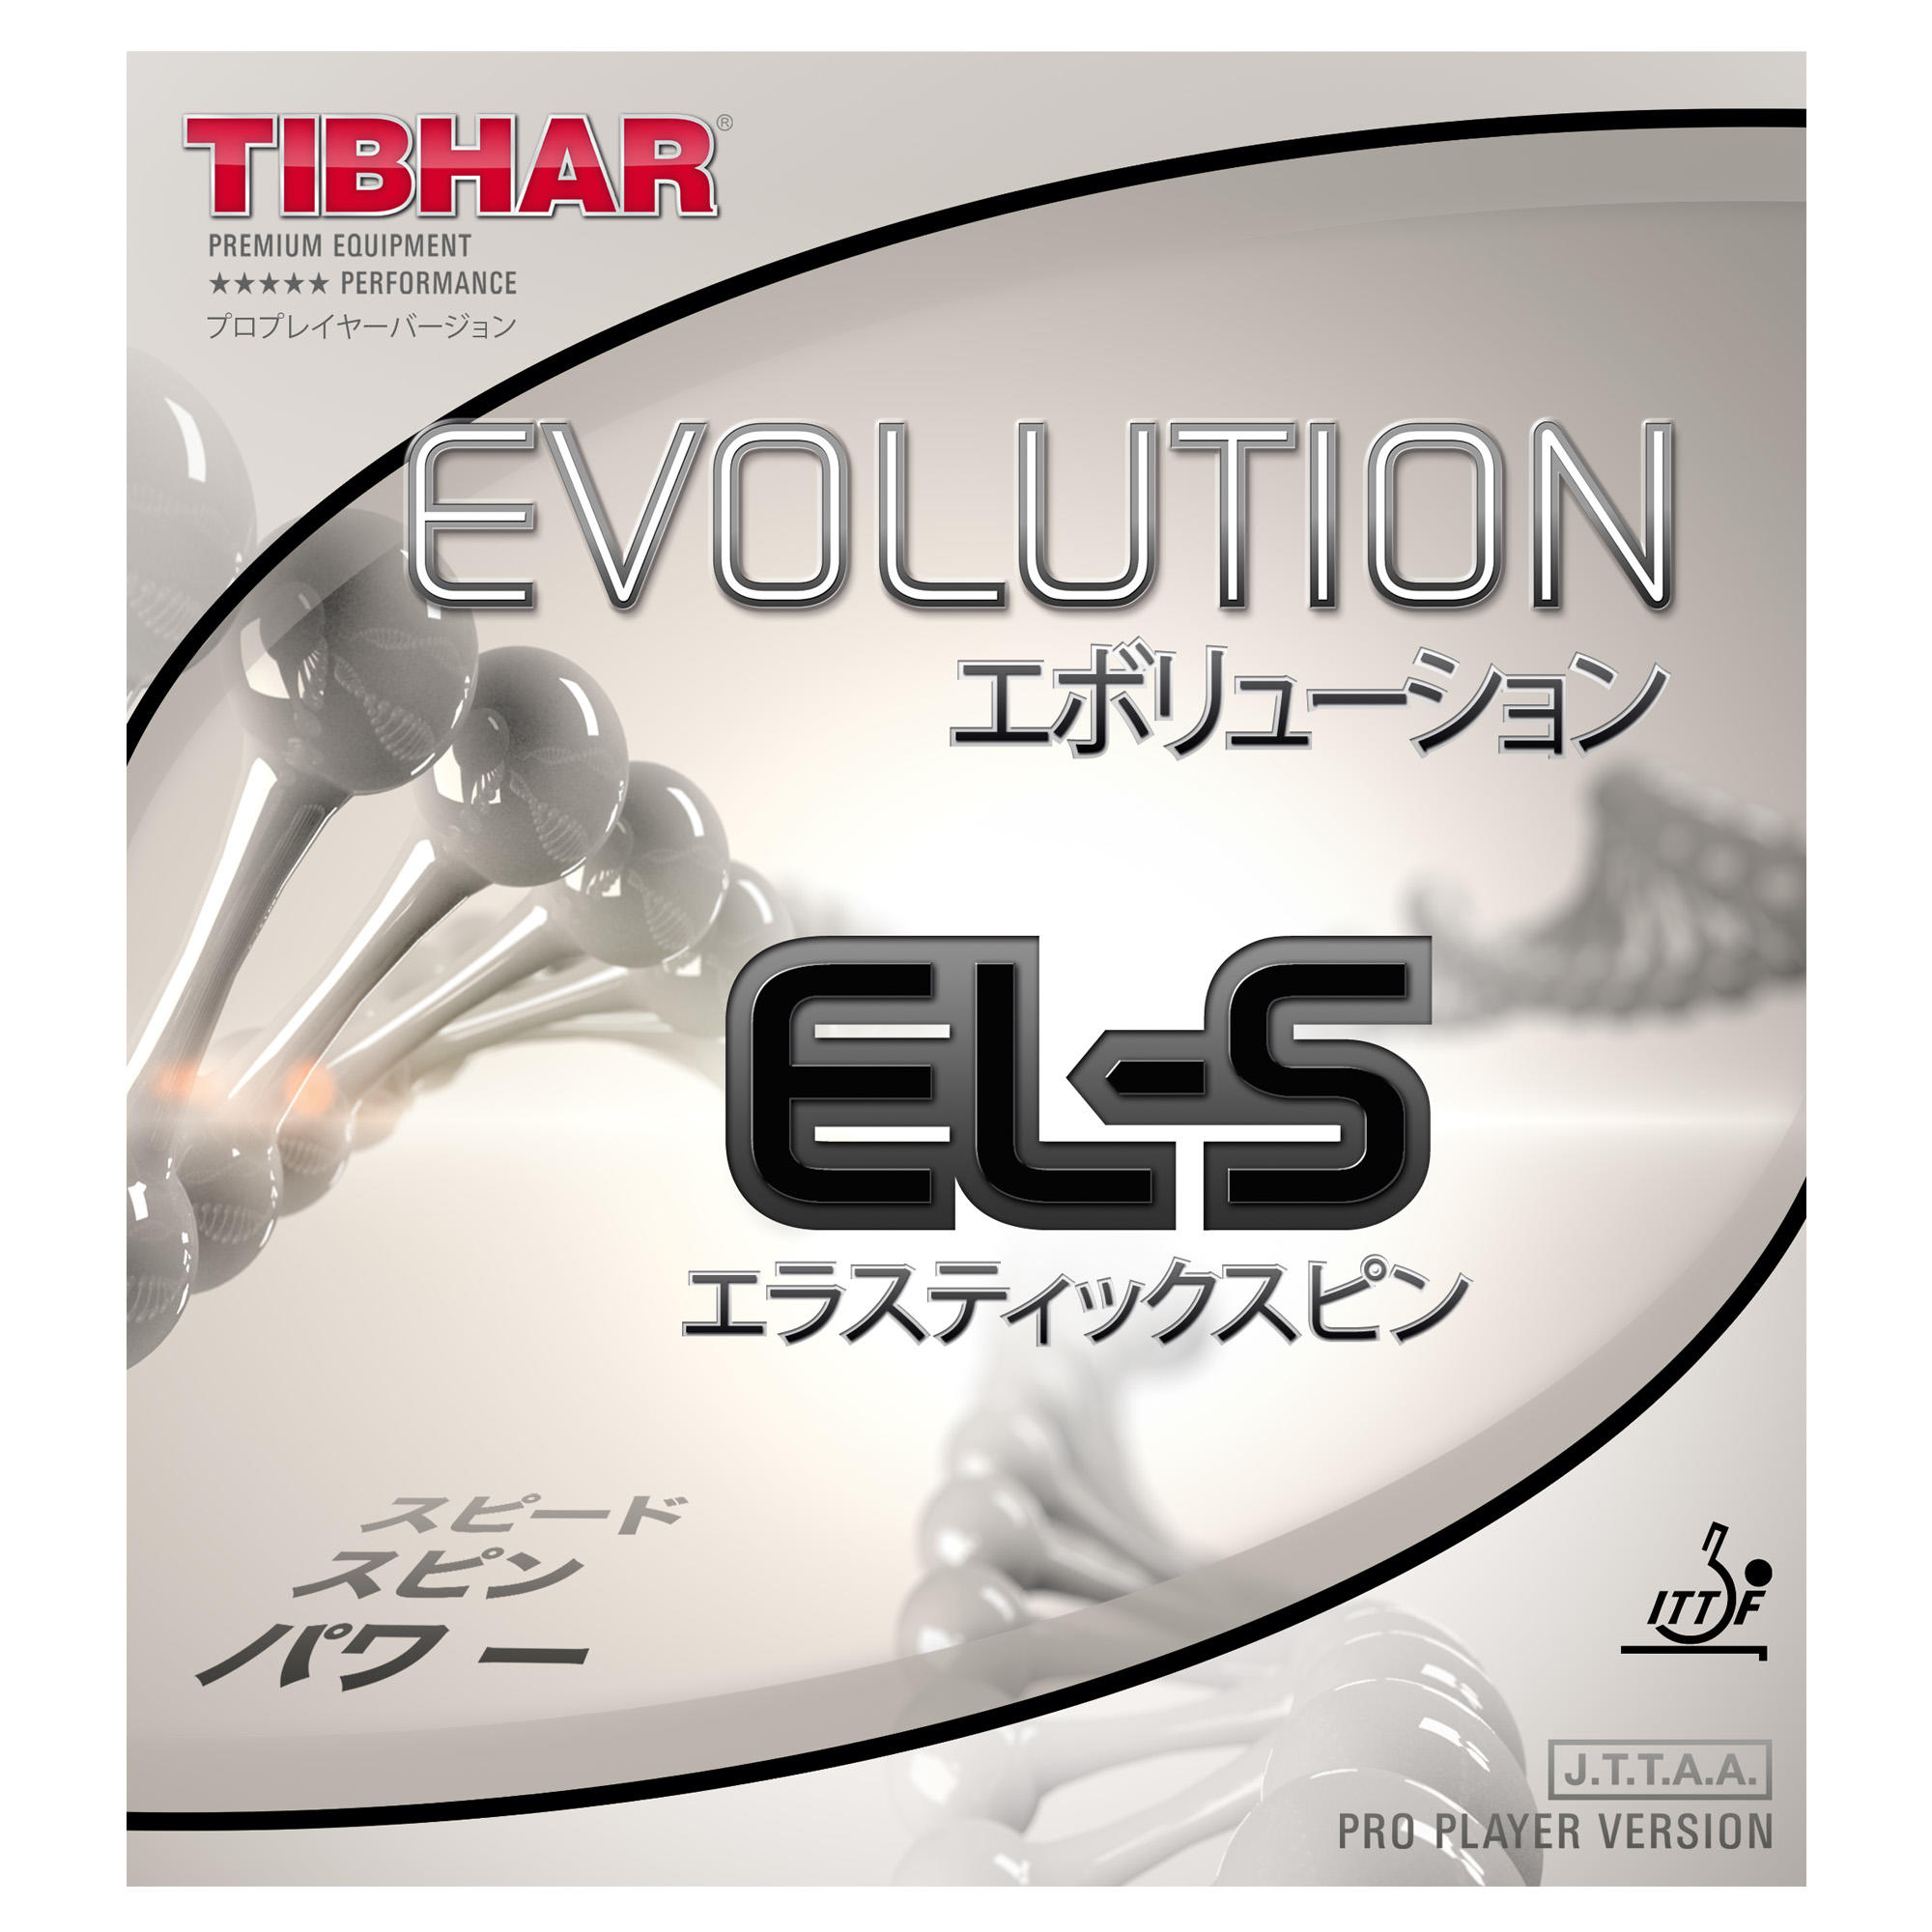 Față Paletă Tenis Evolution EL-S TIBHAR decathlon.ro